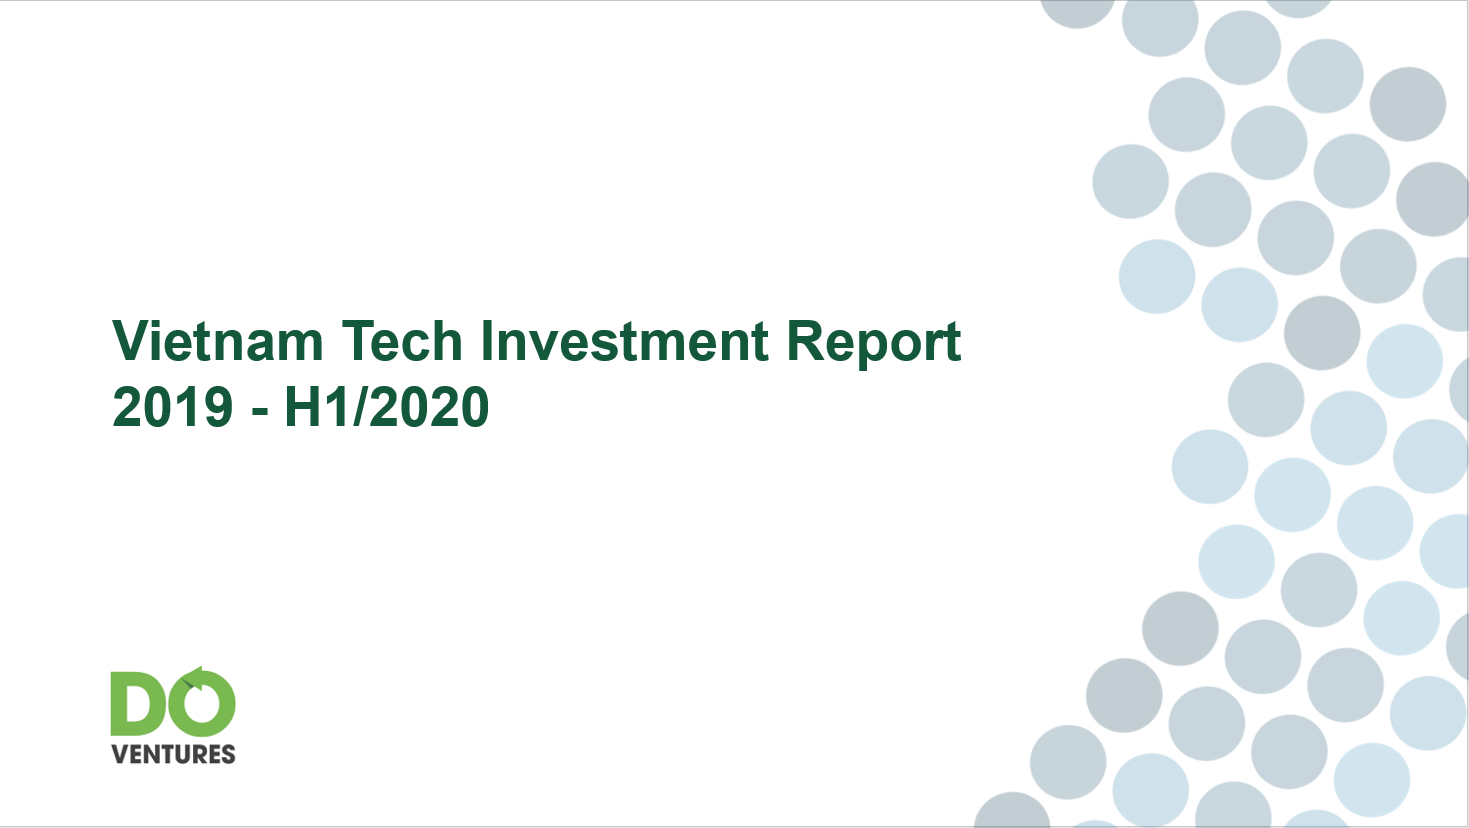 xvietnam-tech-investment-report